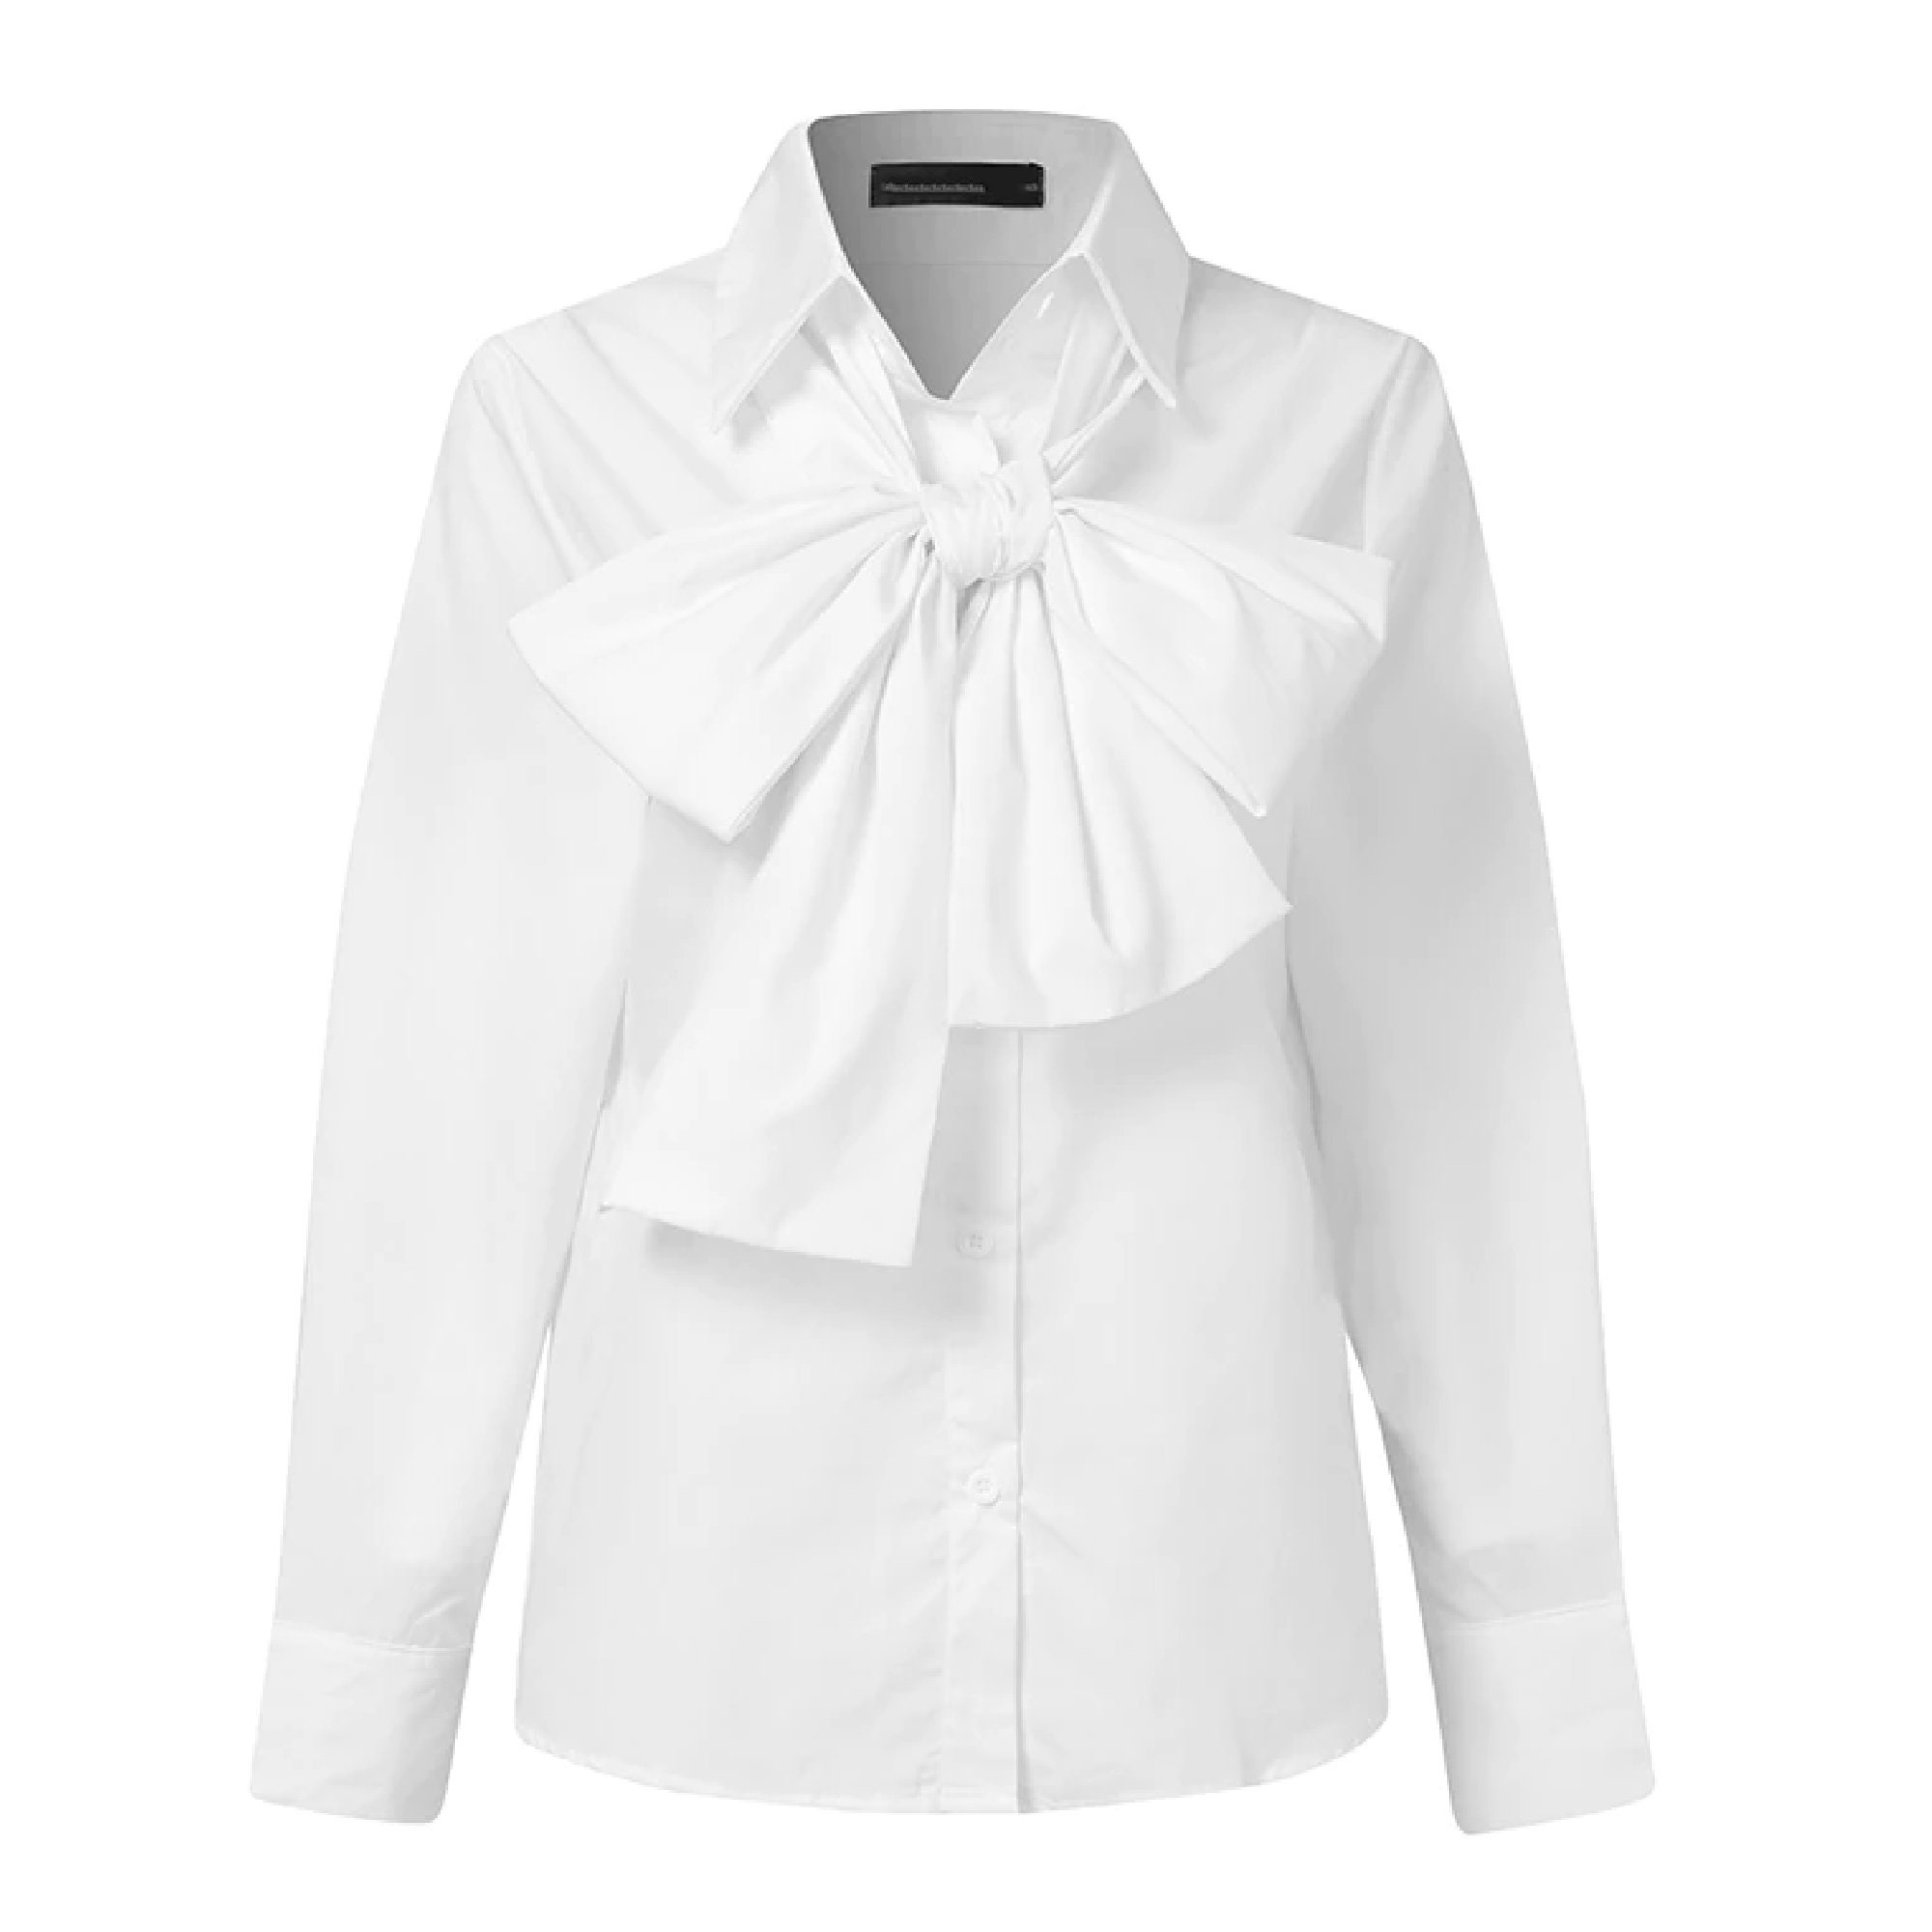 Women Elegant Shirt Long Sleeve White Blouse Casual Office | Etsy